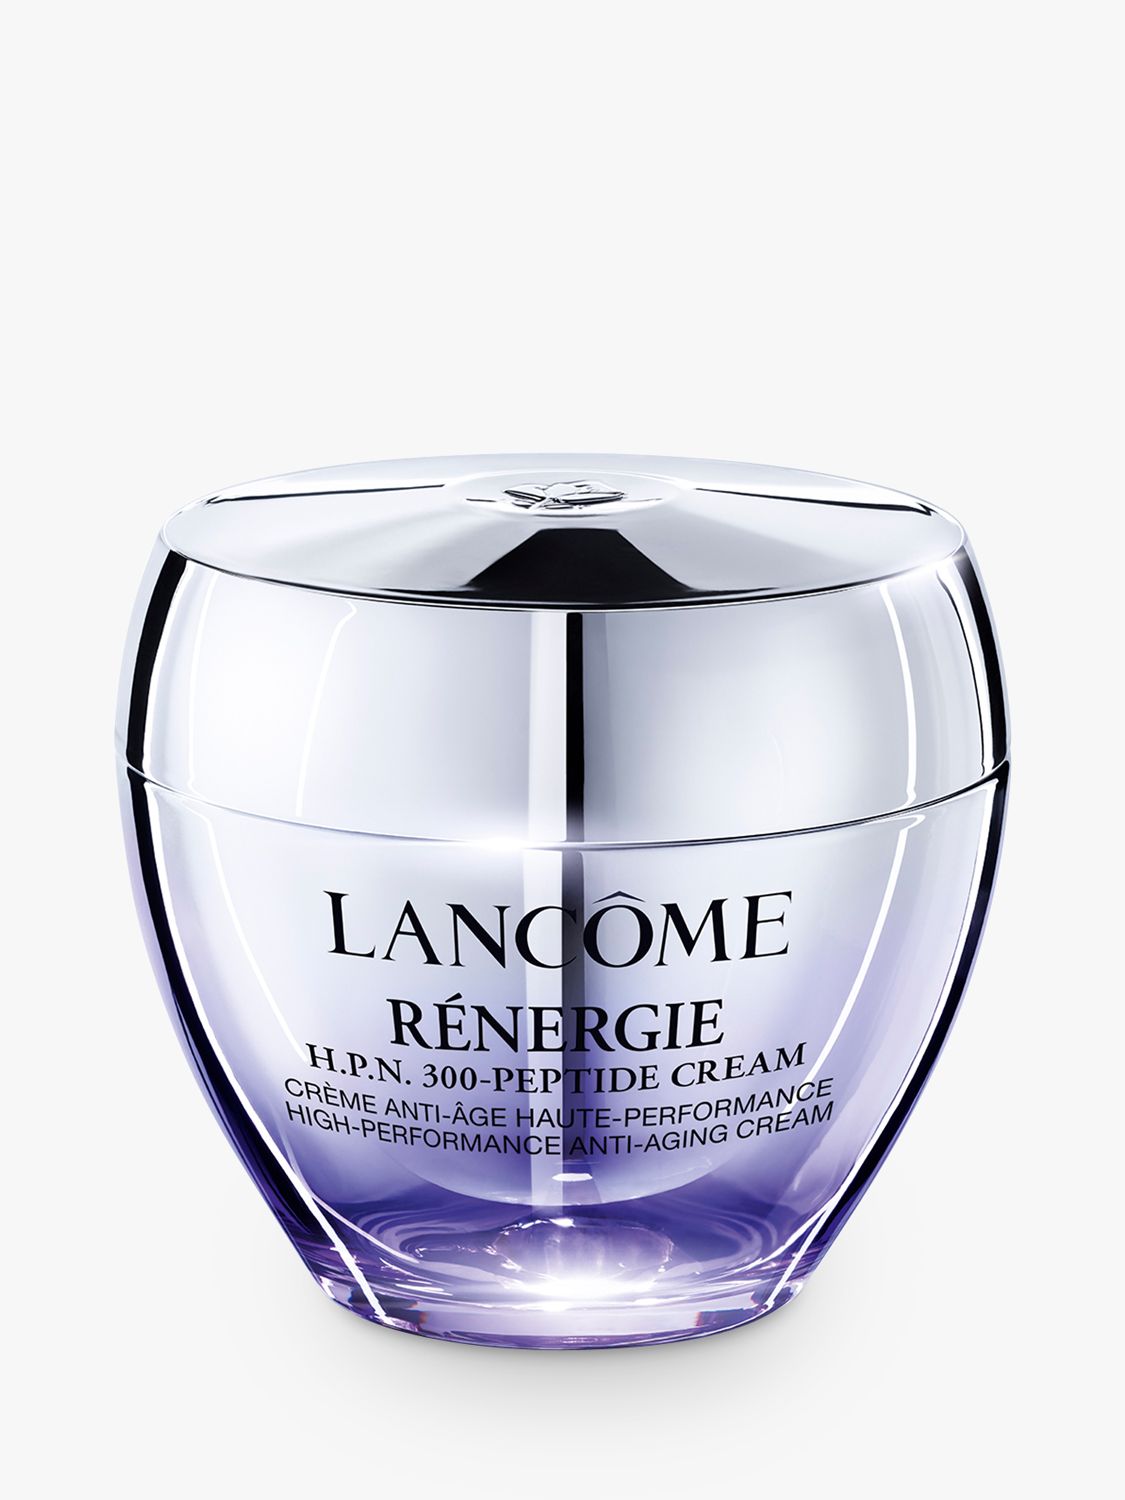 Lancôme Rénergie H.P.N. 300-Peptide Cream, 50ml 1